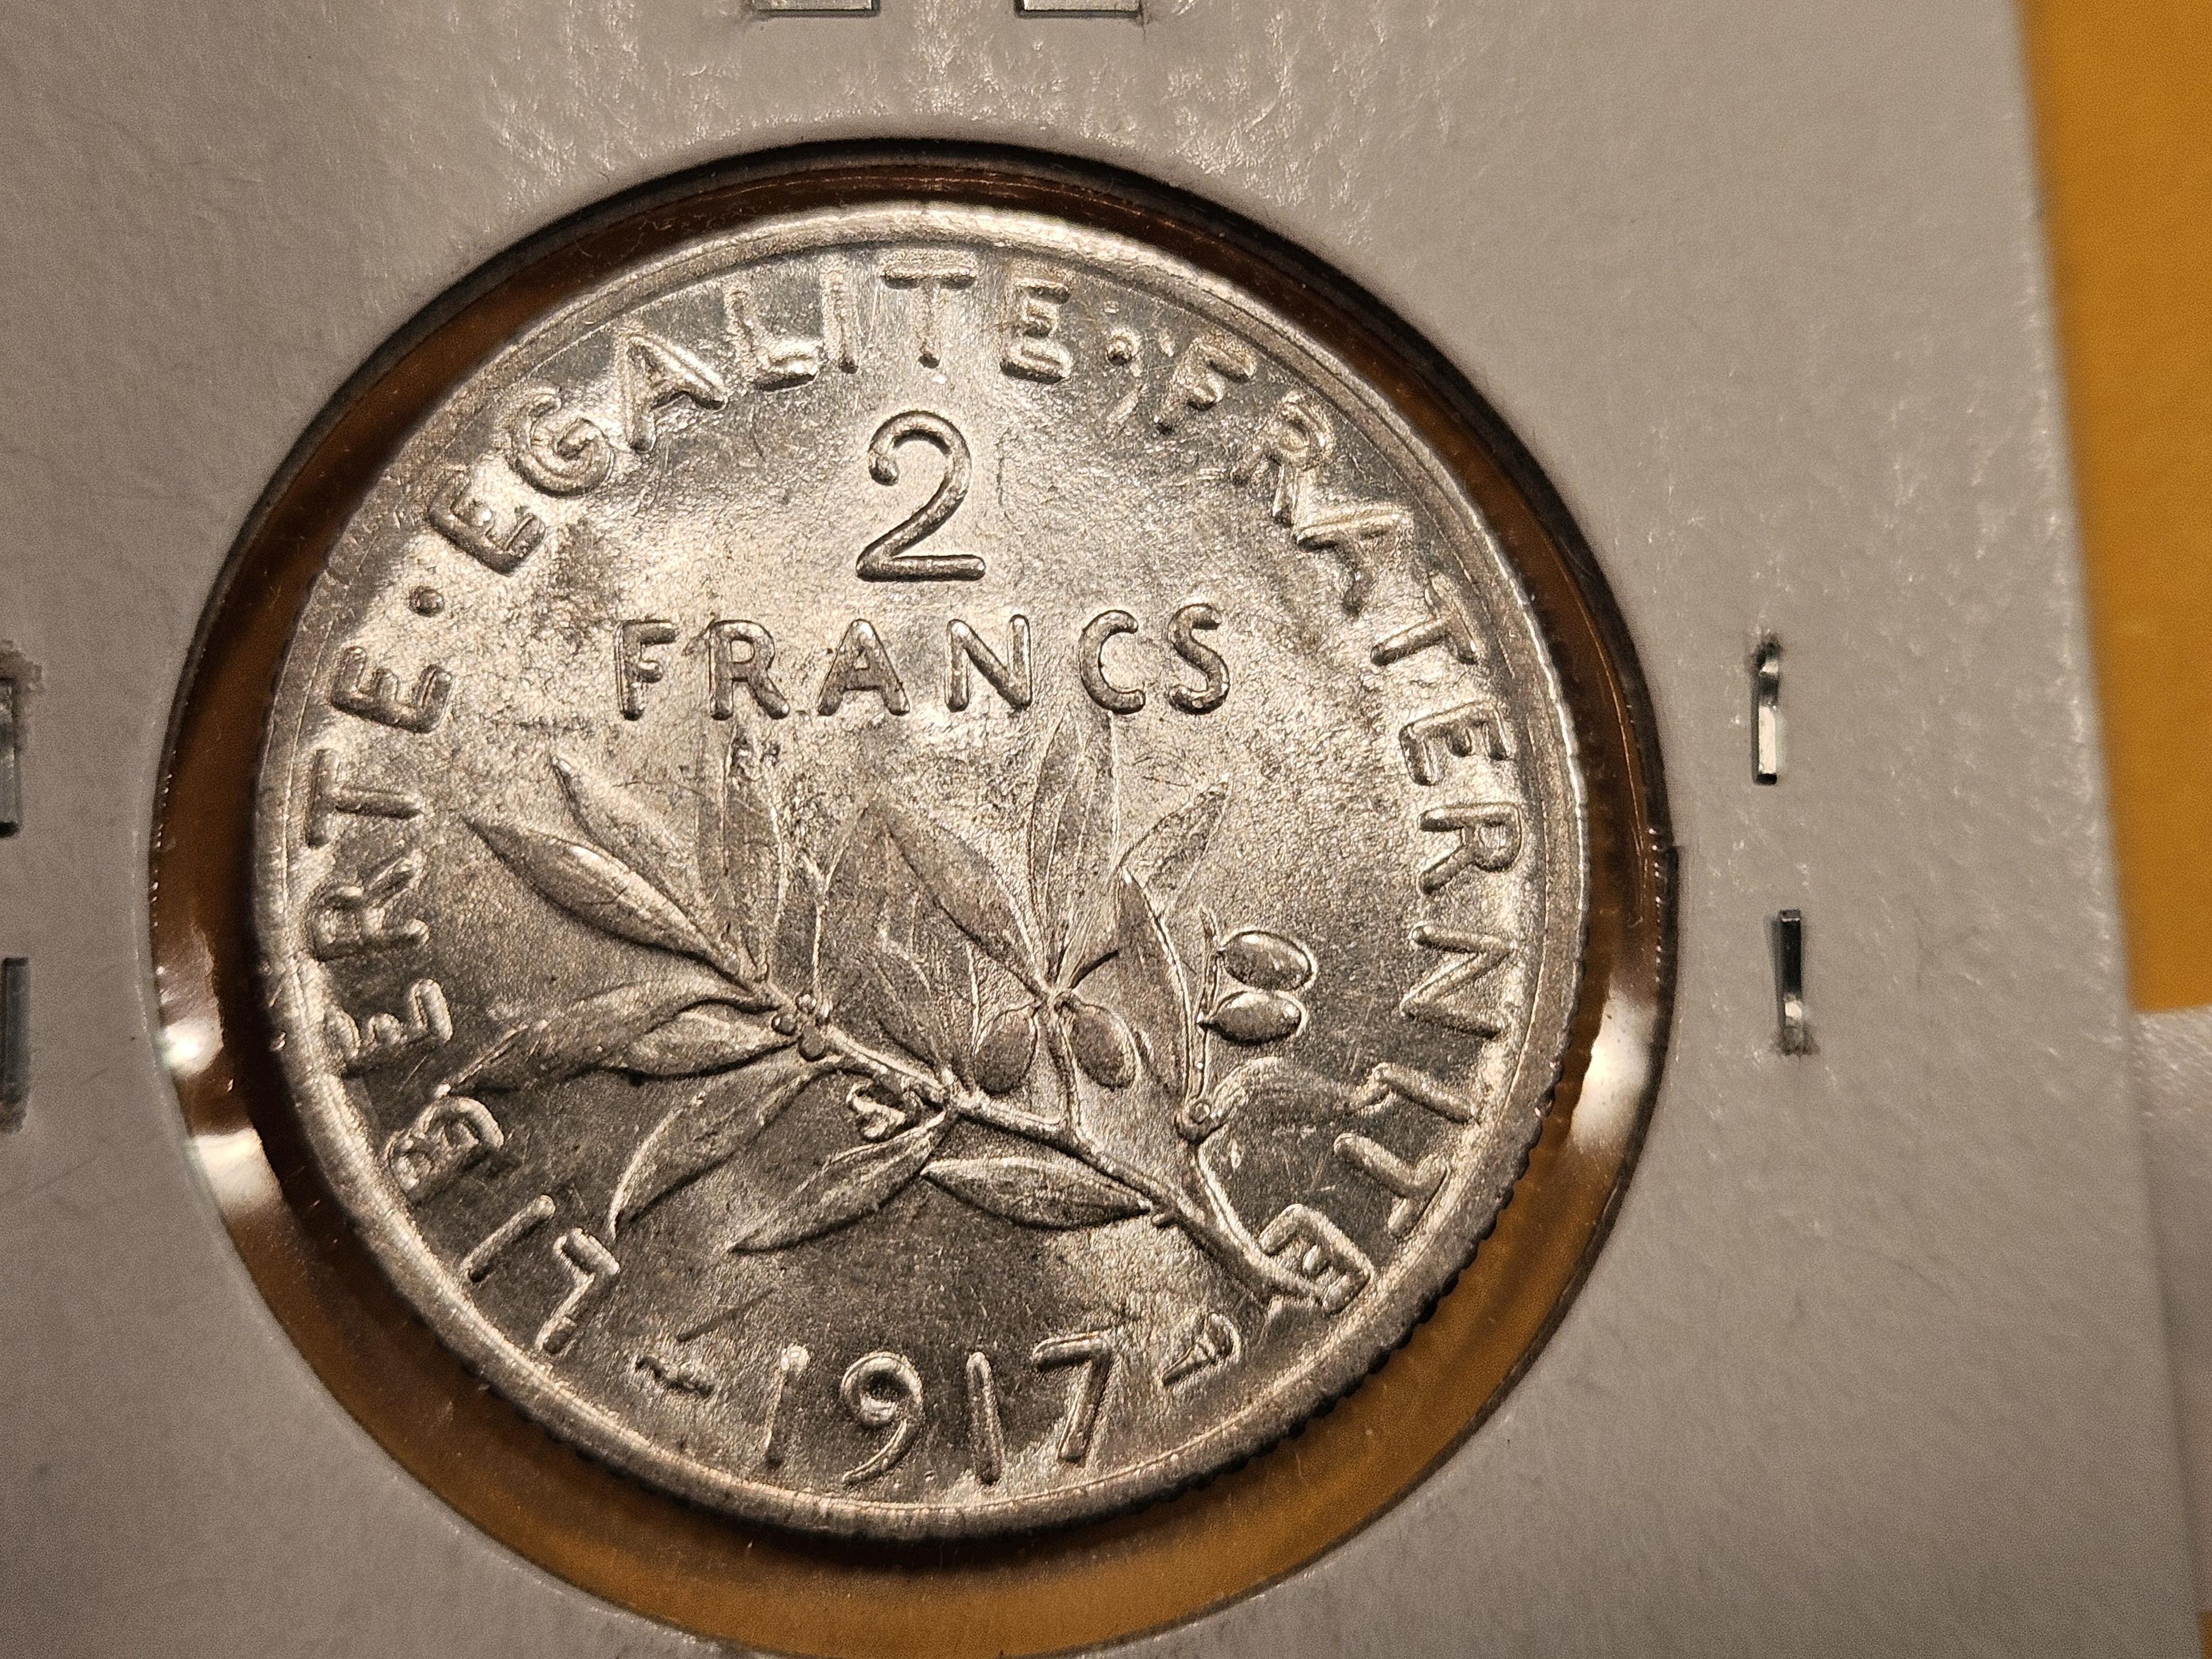 Choice Brilliant Uncirculated 1917 France silver 2 francs